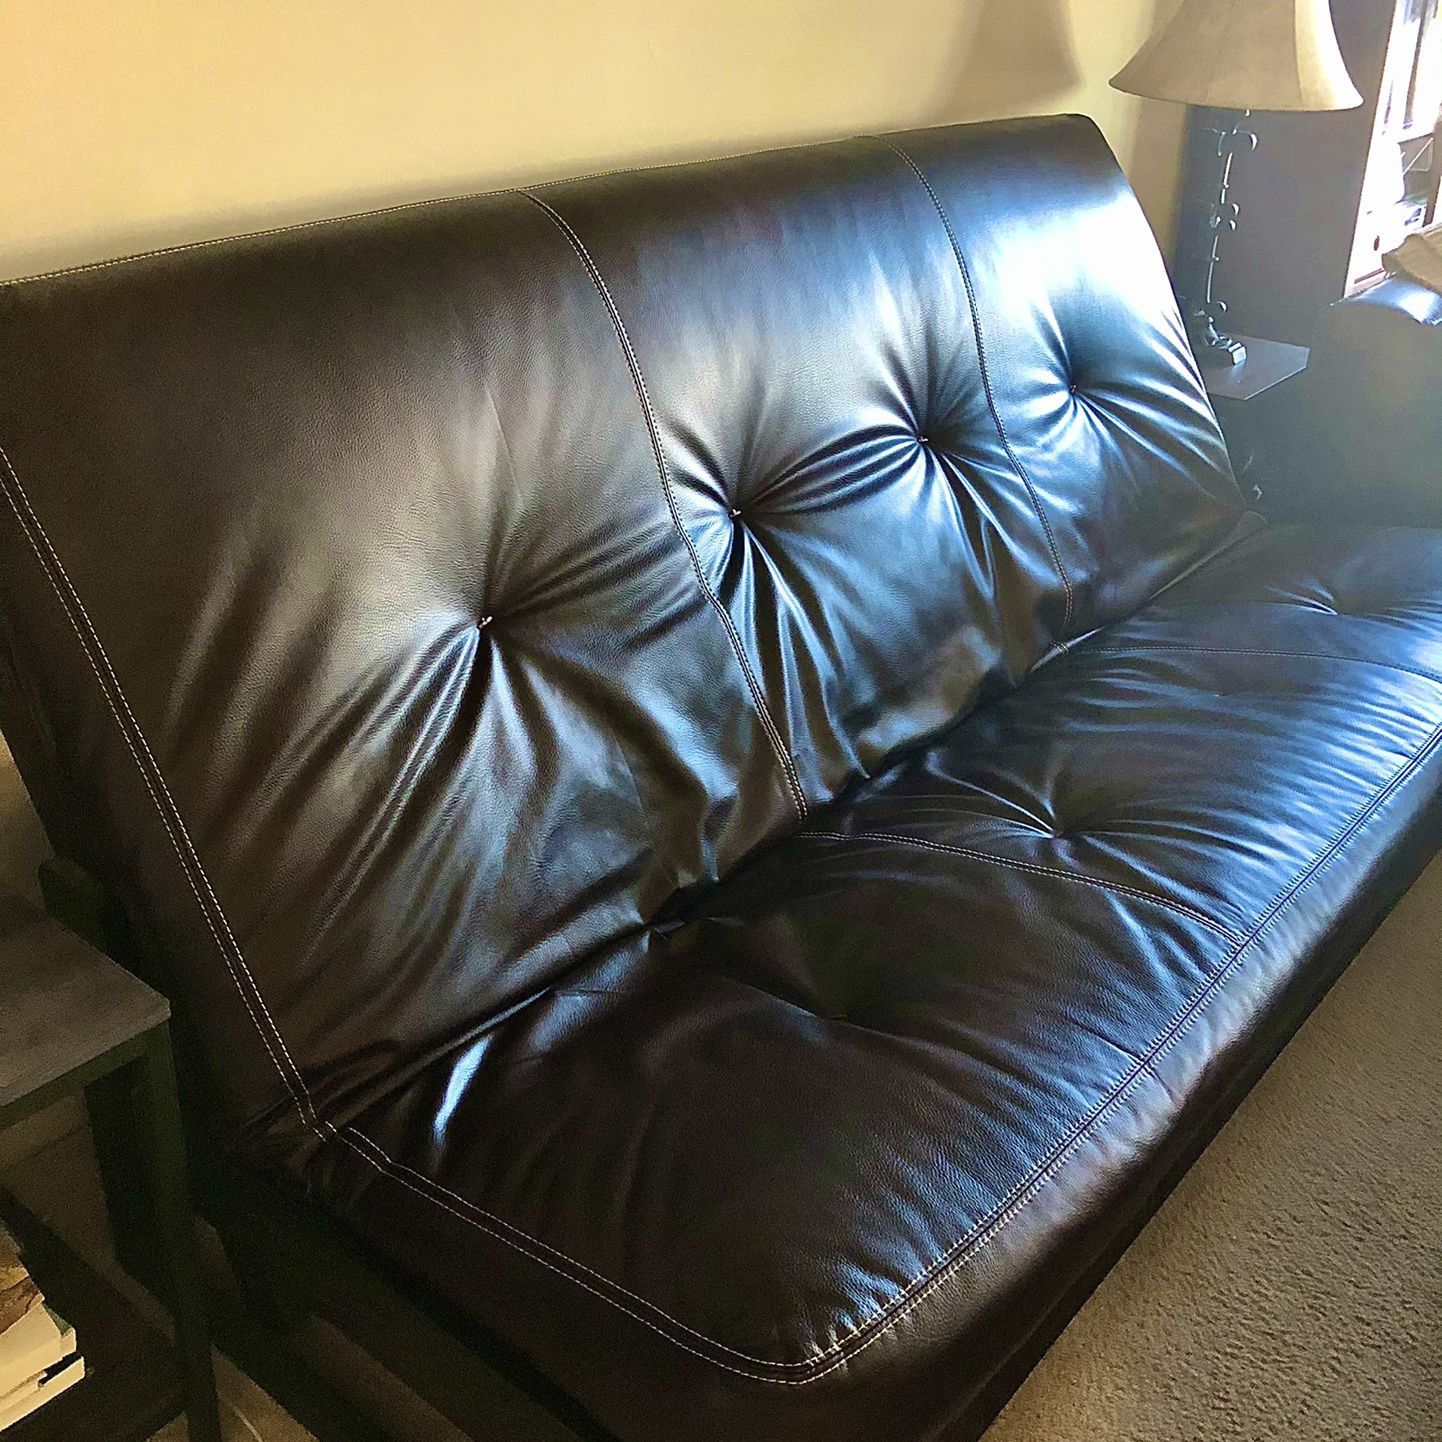 Full 76” futon and mattress